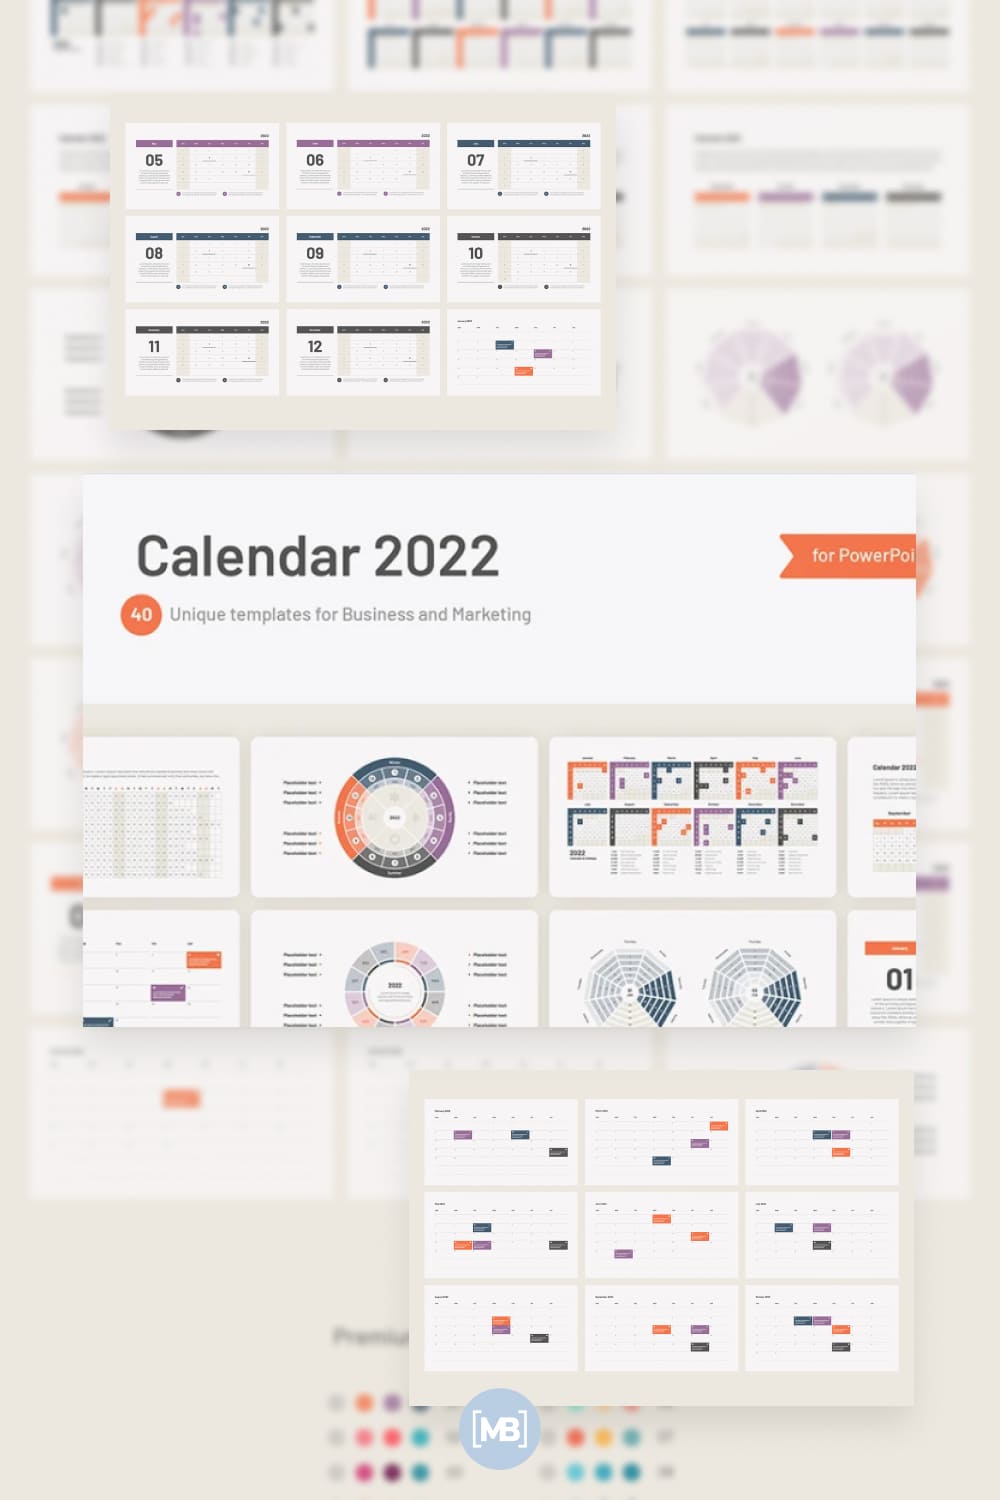 Calendar 2022 templates for powerpoint.